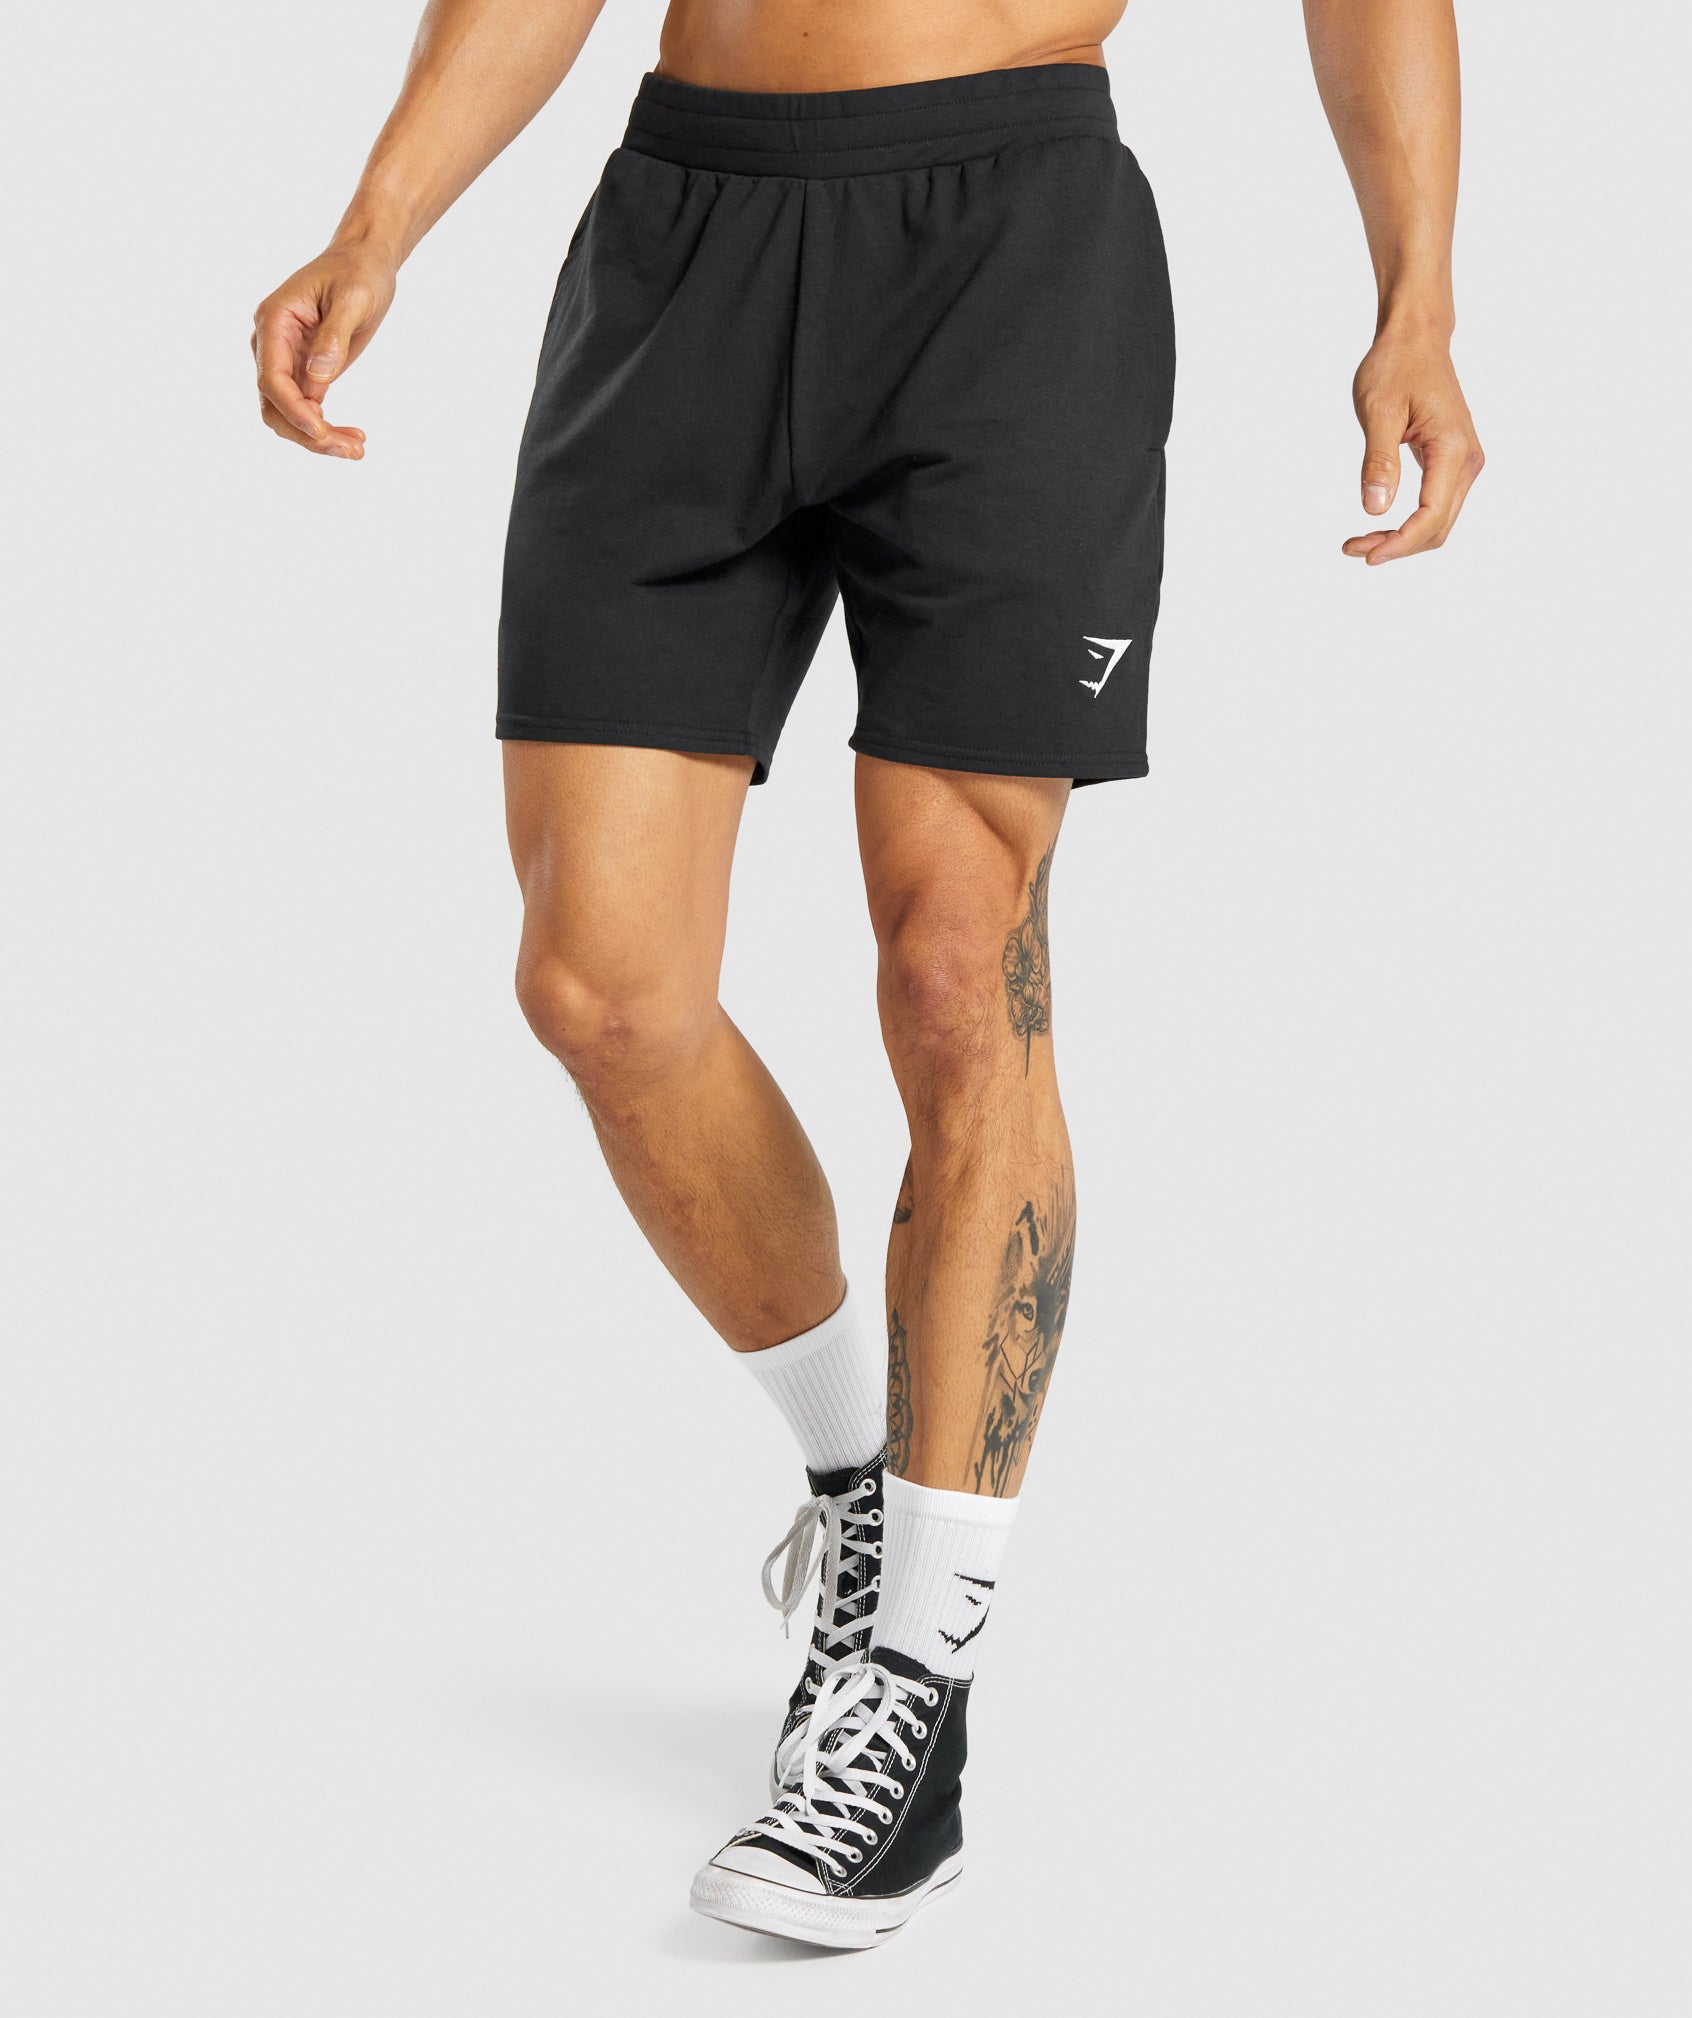 Gymshark Essential 7 Shorts - Black